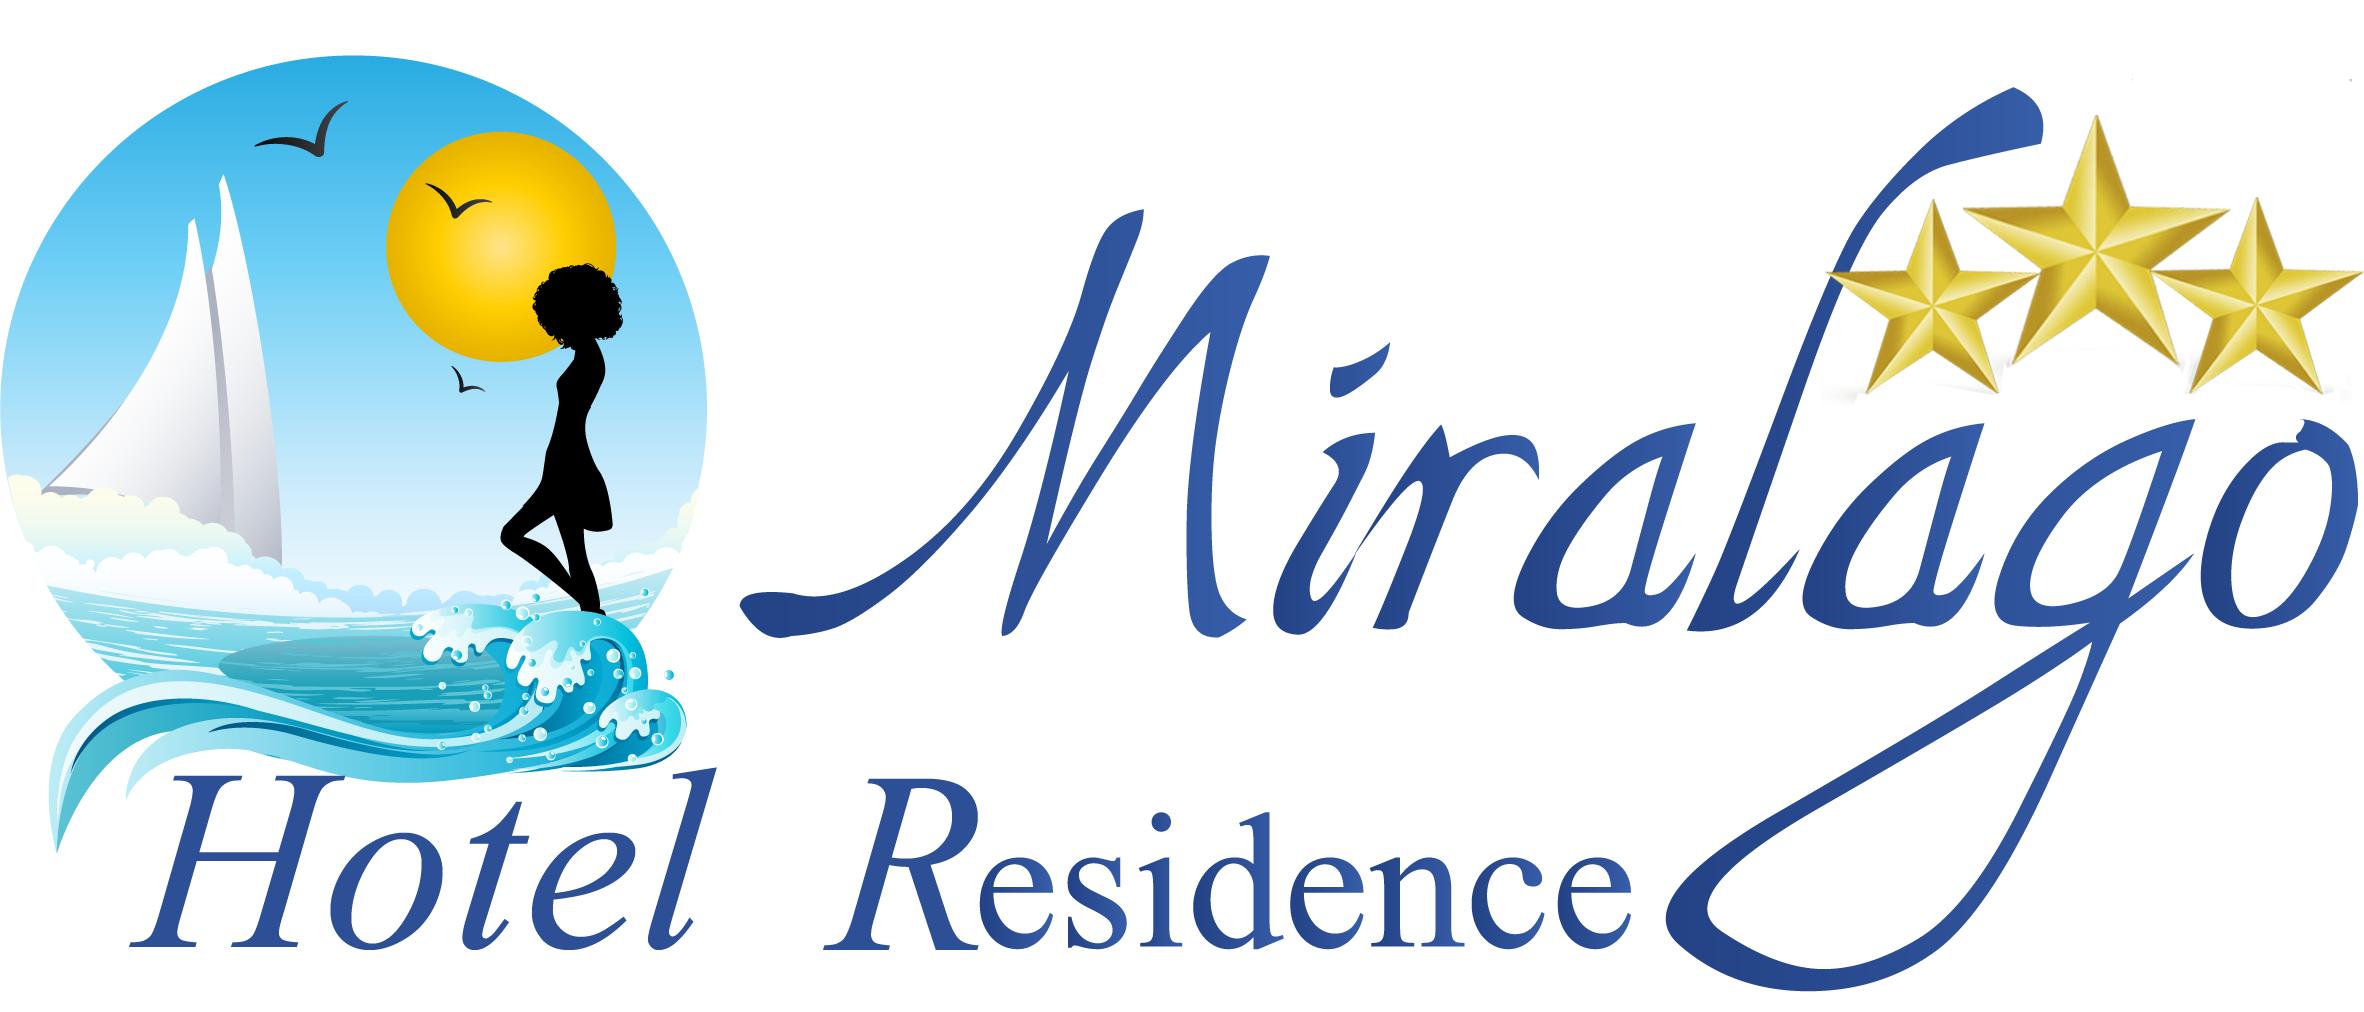 Hotel Residence Miralago rooms and apartments Manerba Garda lake